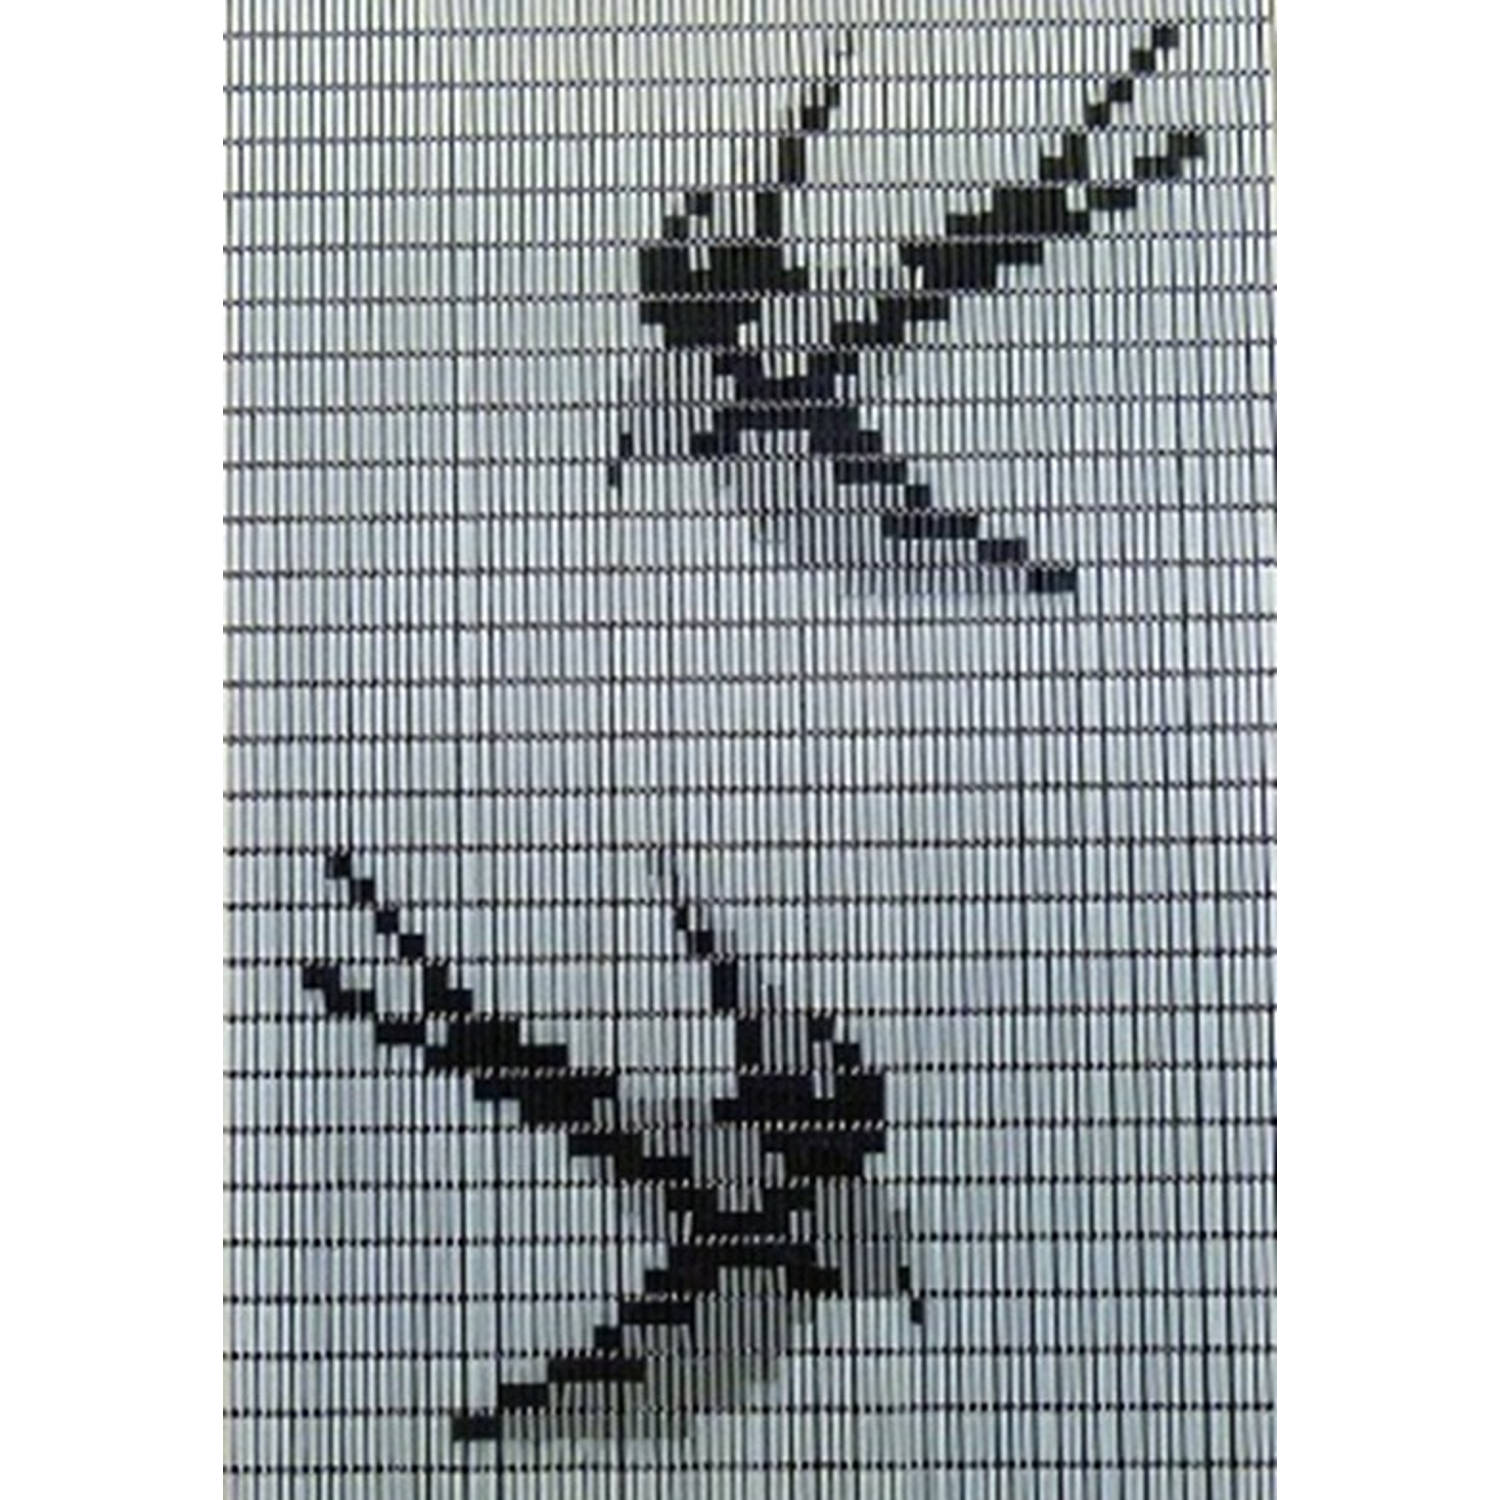 Hulzen Zwaluwen transparant 90x210cm